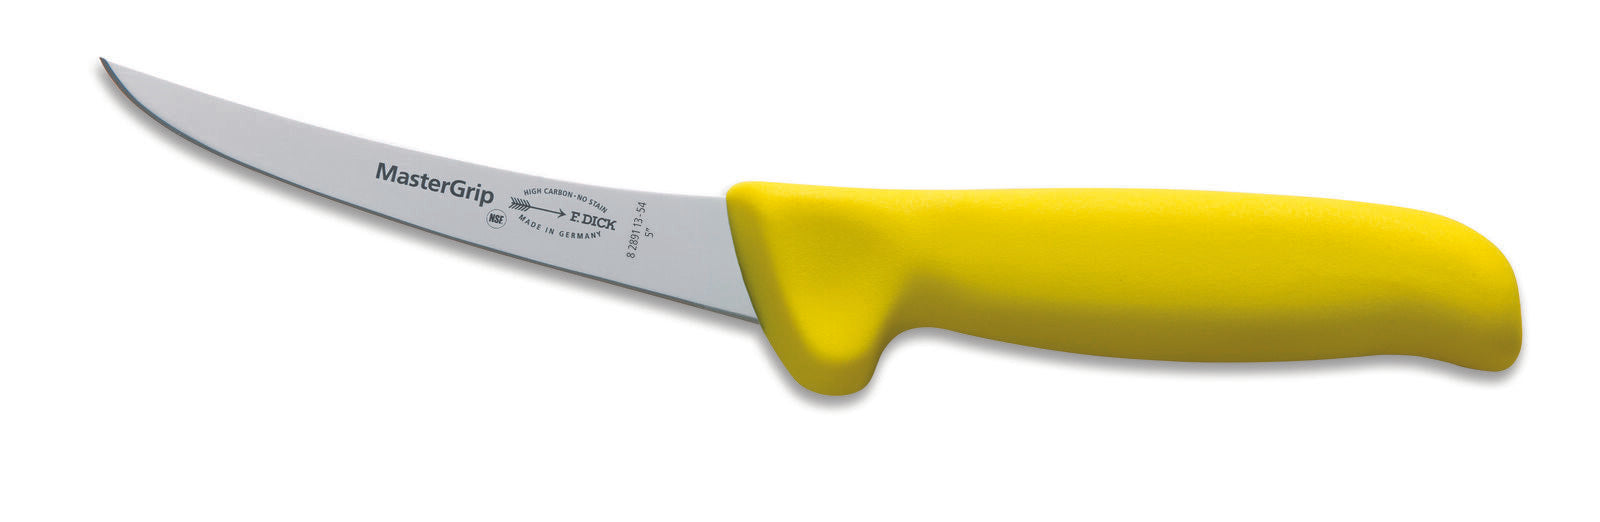 F. Dick (8289113-54) 5" Mastergrip Boning Knife, Curved, Stiff, Yellow Handle-cityfoodequipment.com